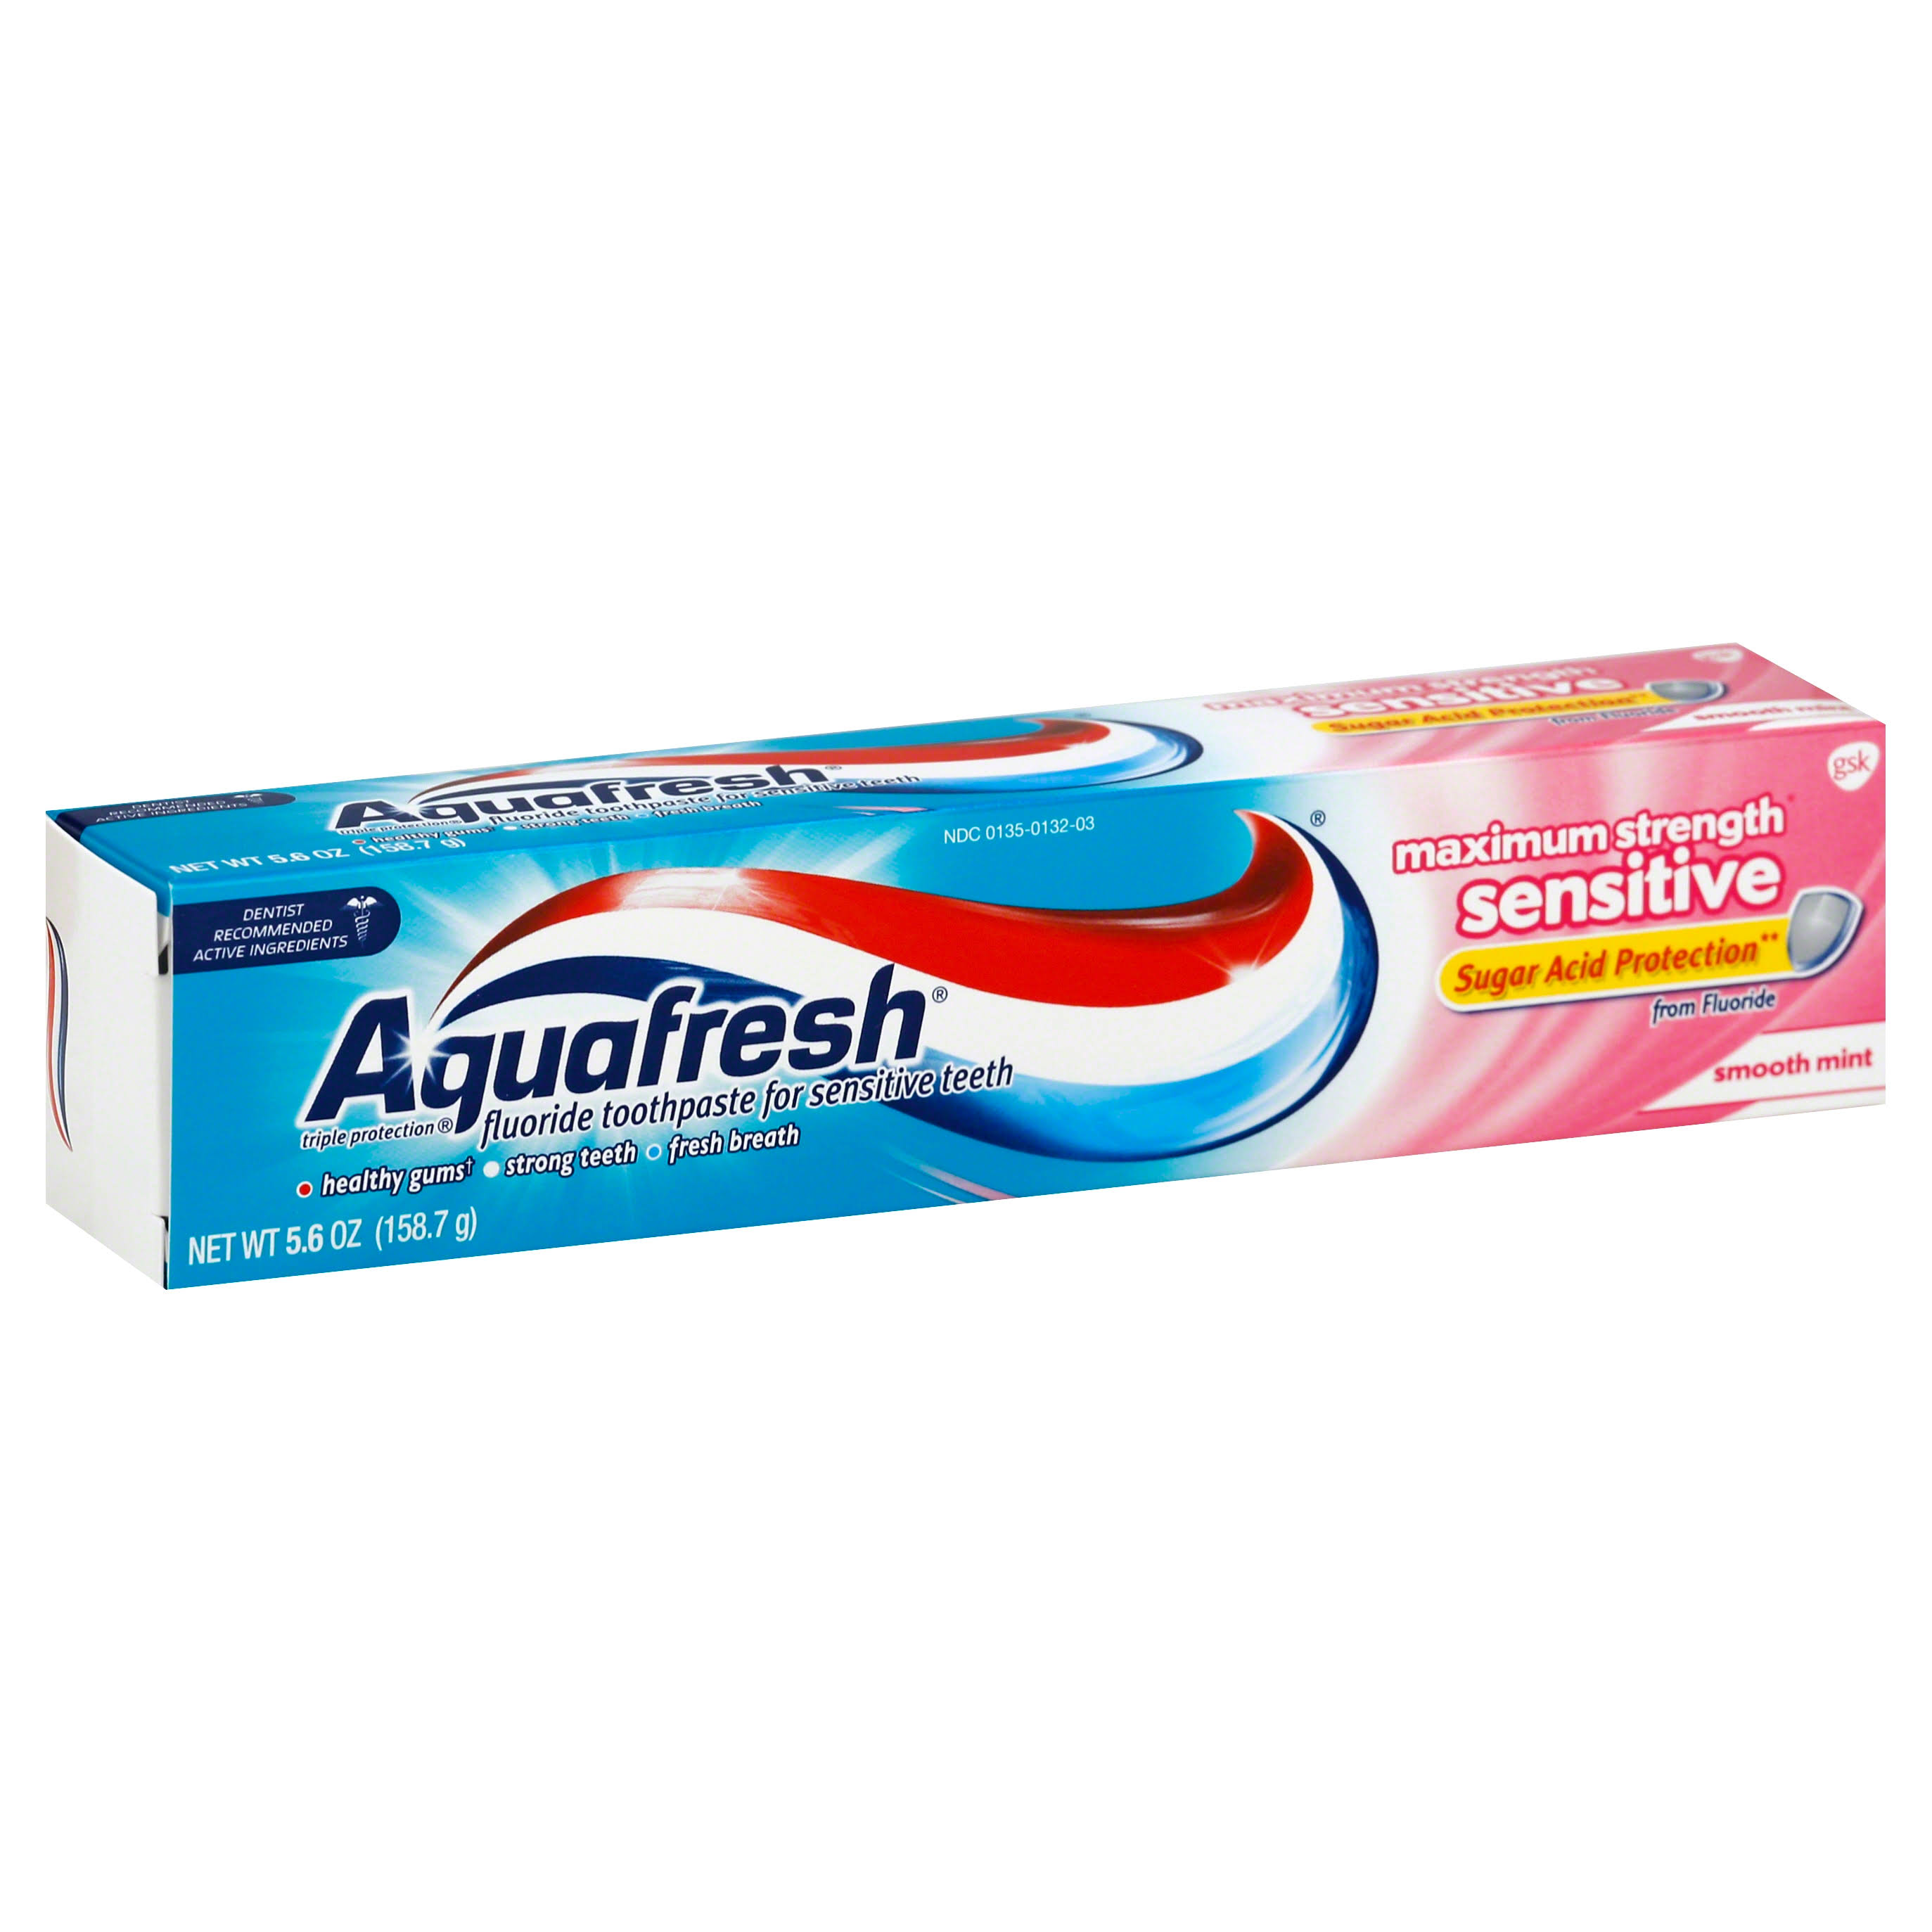 Aquafresh Fluoride Toothpaste - Sensitive, Maximum Strength, 5.6oz